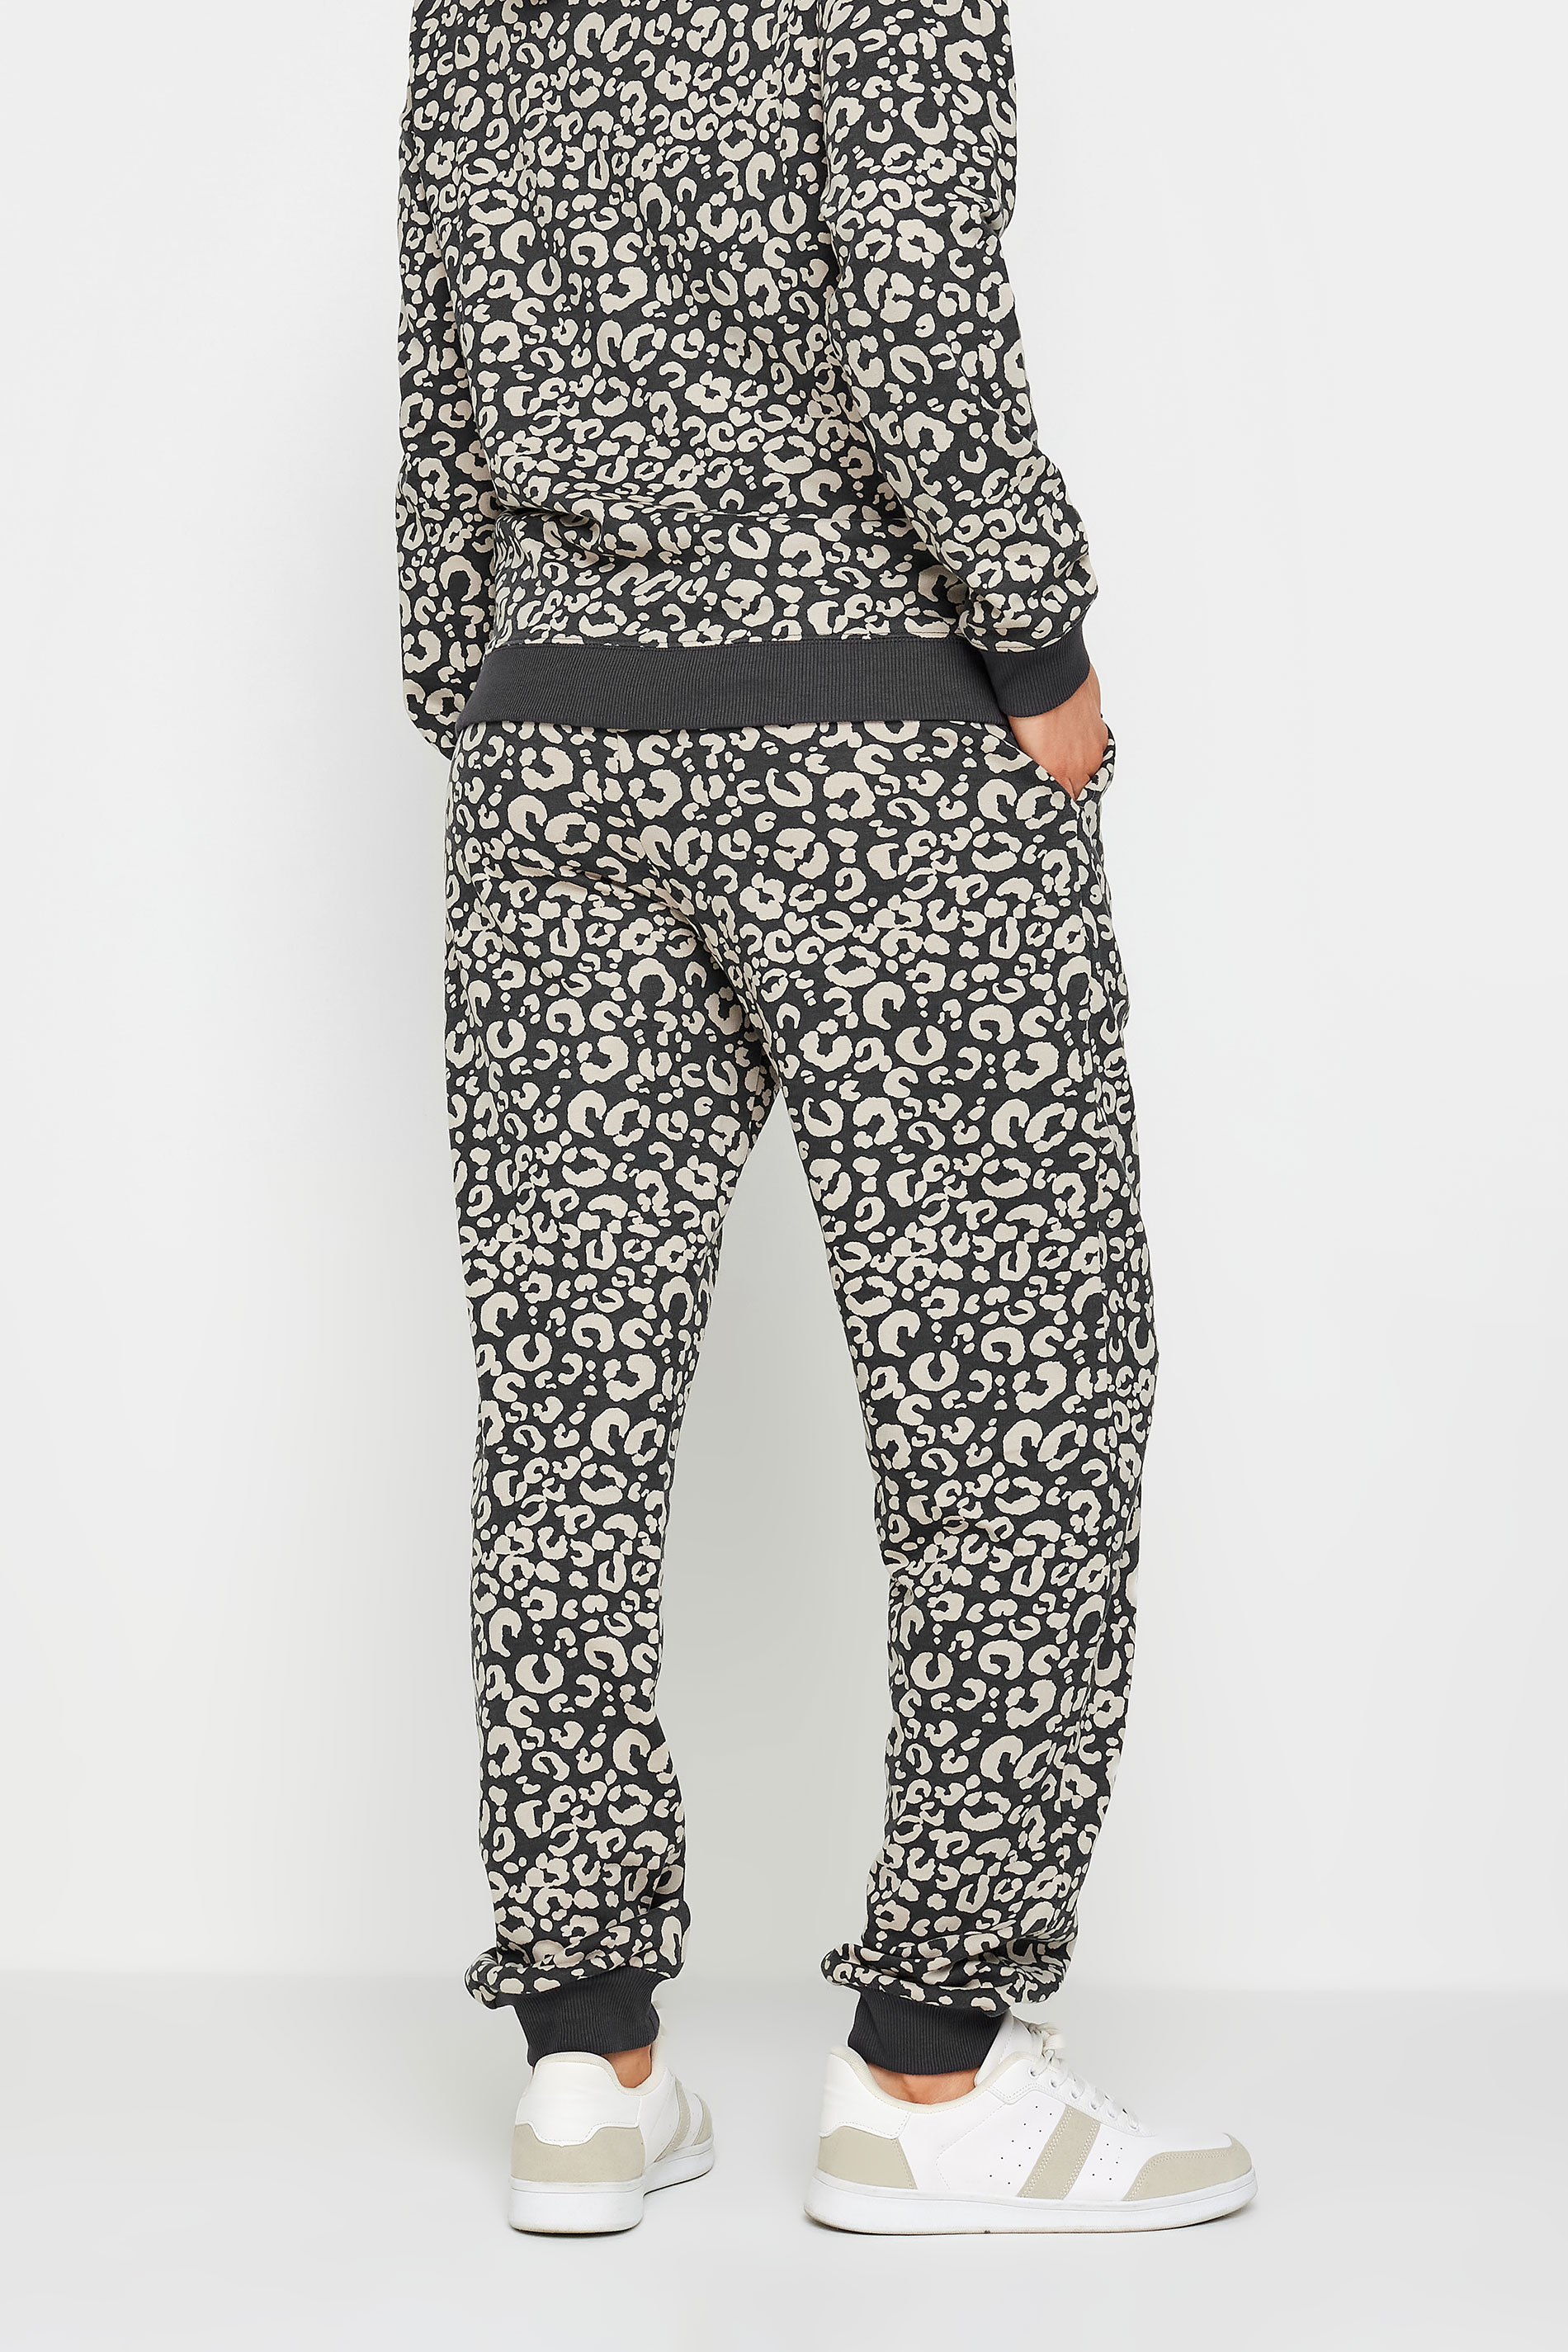 LTS Tall Women's Charcoal Grey & Brown Leopard Print Cuffed Joggers | Long Tall Sally 3